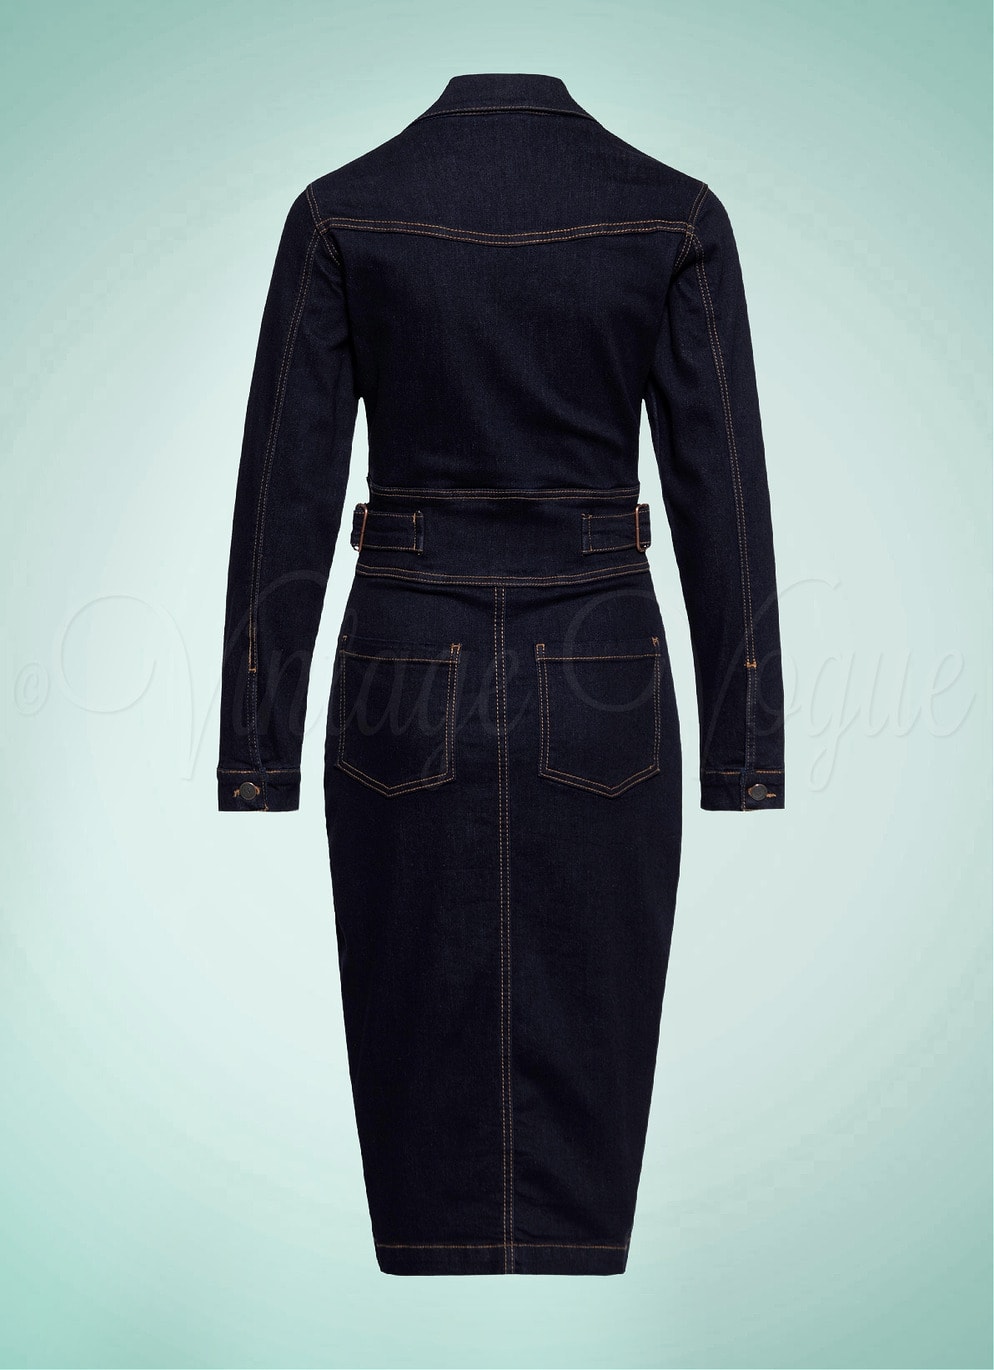 Queen Kerosin Retro Vintage Rockabilly Jeans Bleistift Etui Kleid Workwear Pencil Dress in Denim Blau QKI36003-702